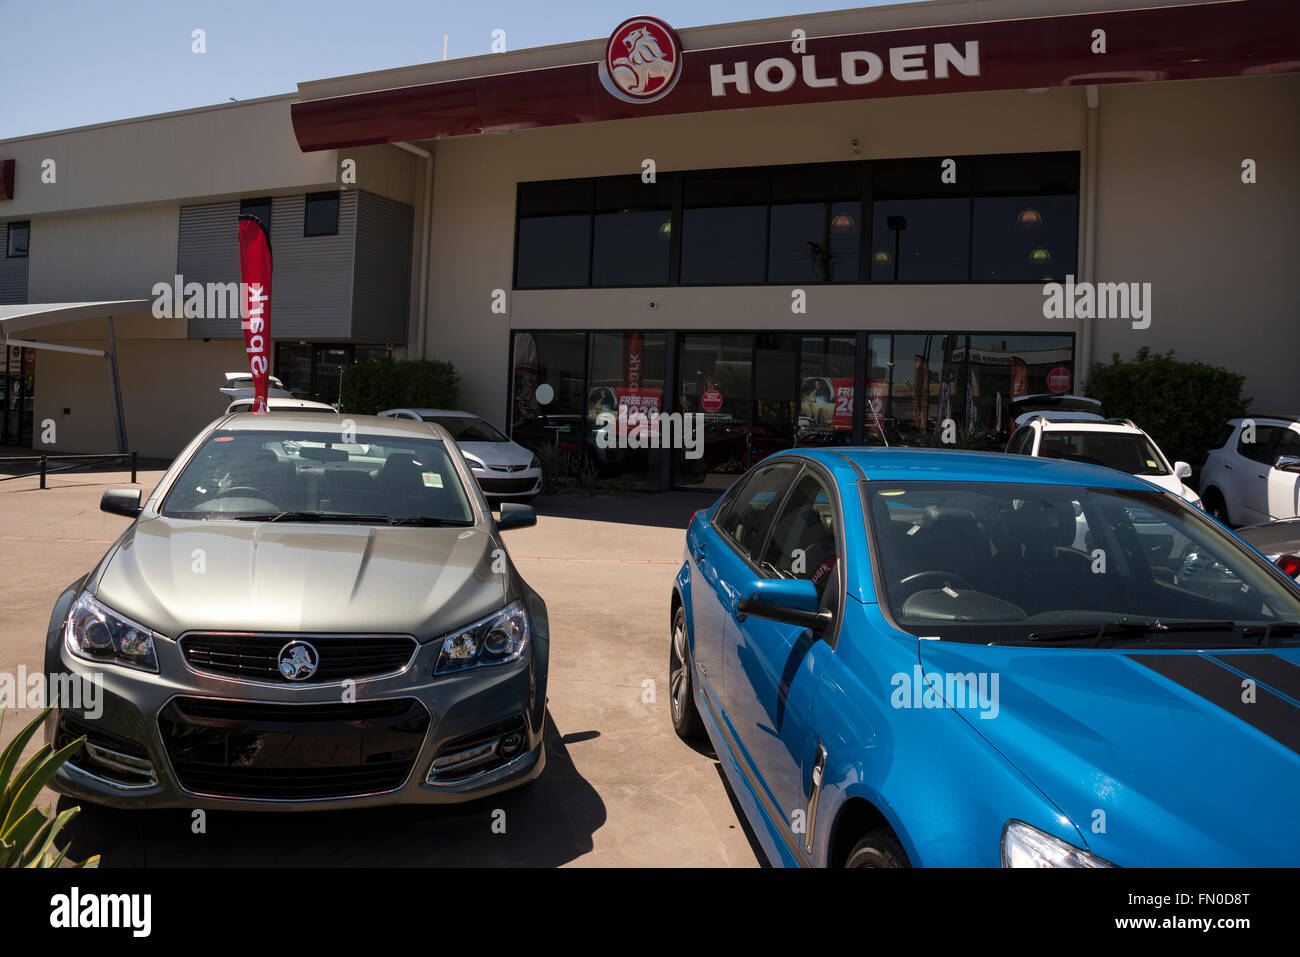 A Holden car dealership in Caloundra on the Sunshine Coast in Queensland, Australia. Stock Photo